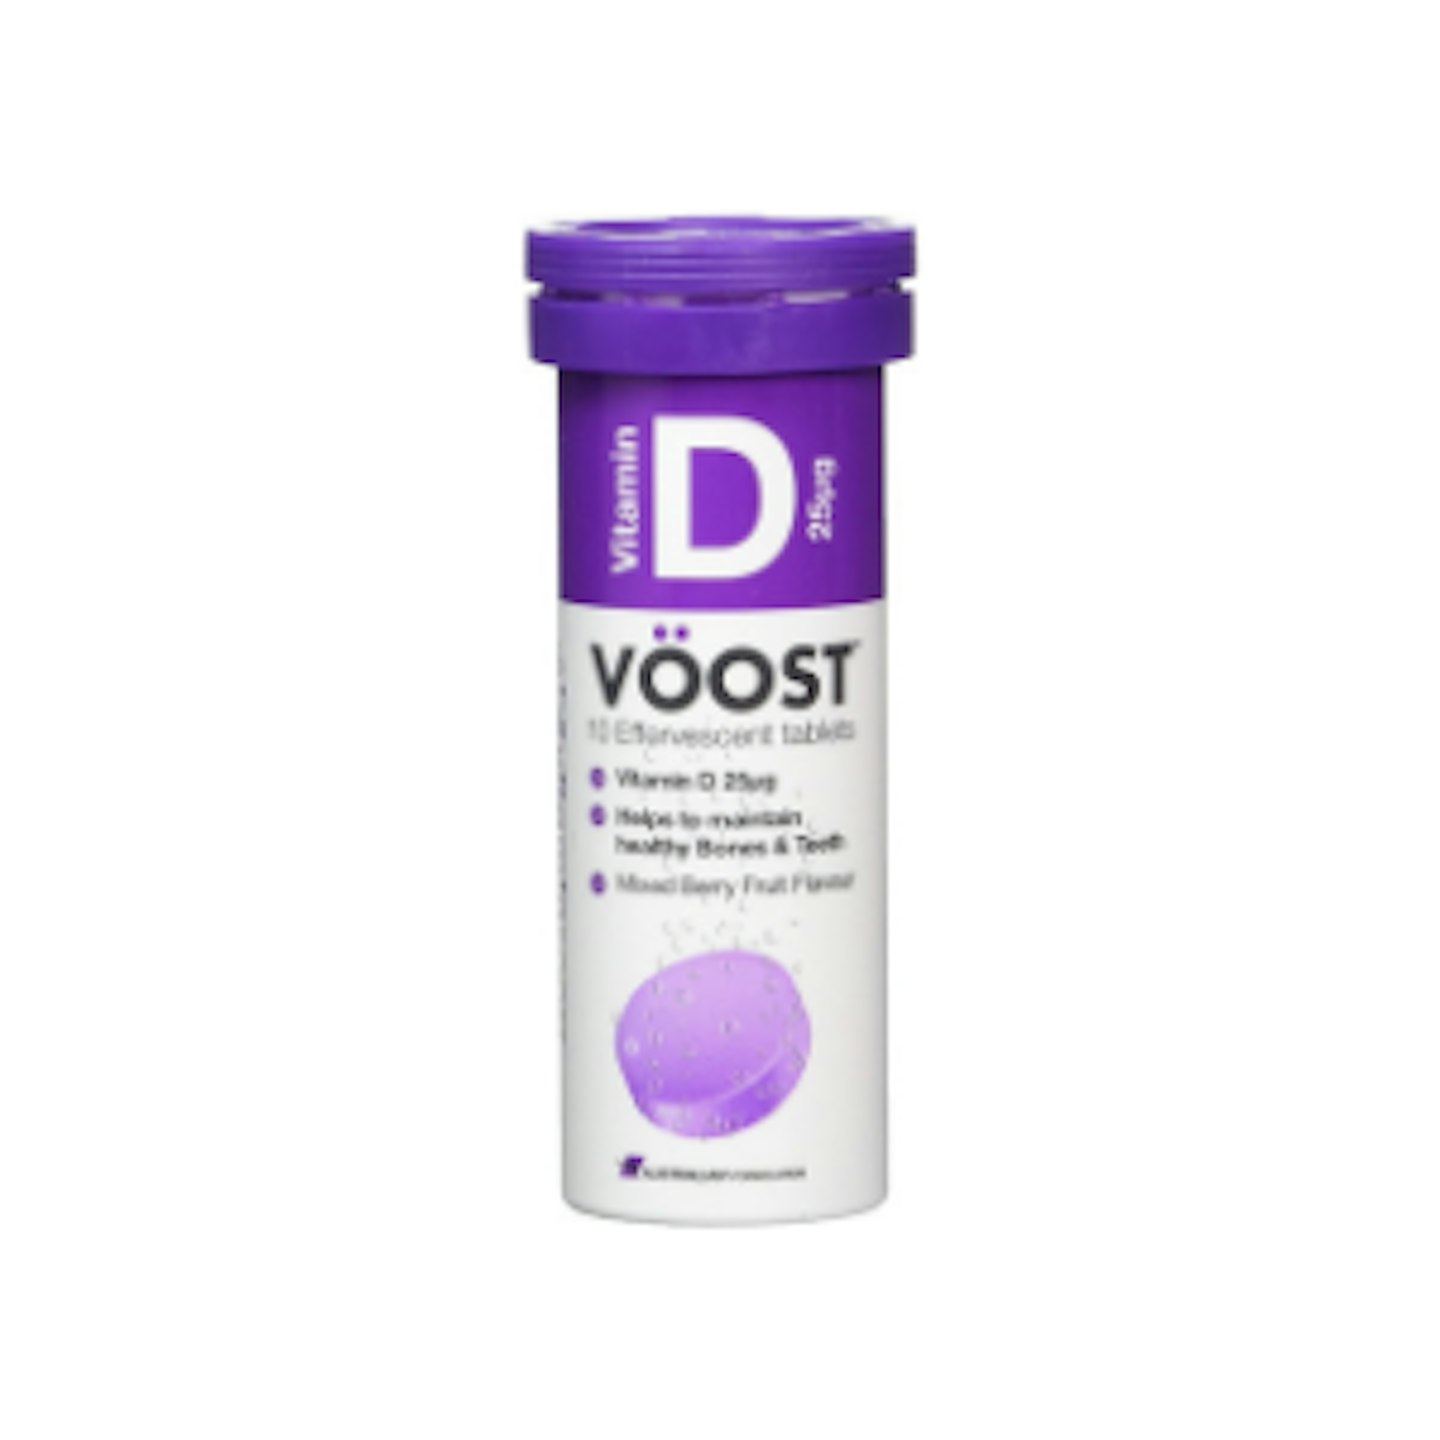 VOOST Vitamin D Effervescent Supplement Tablets